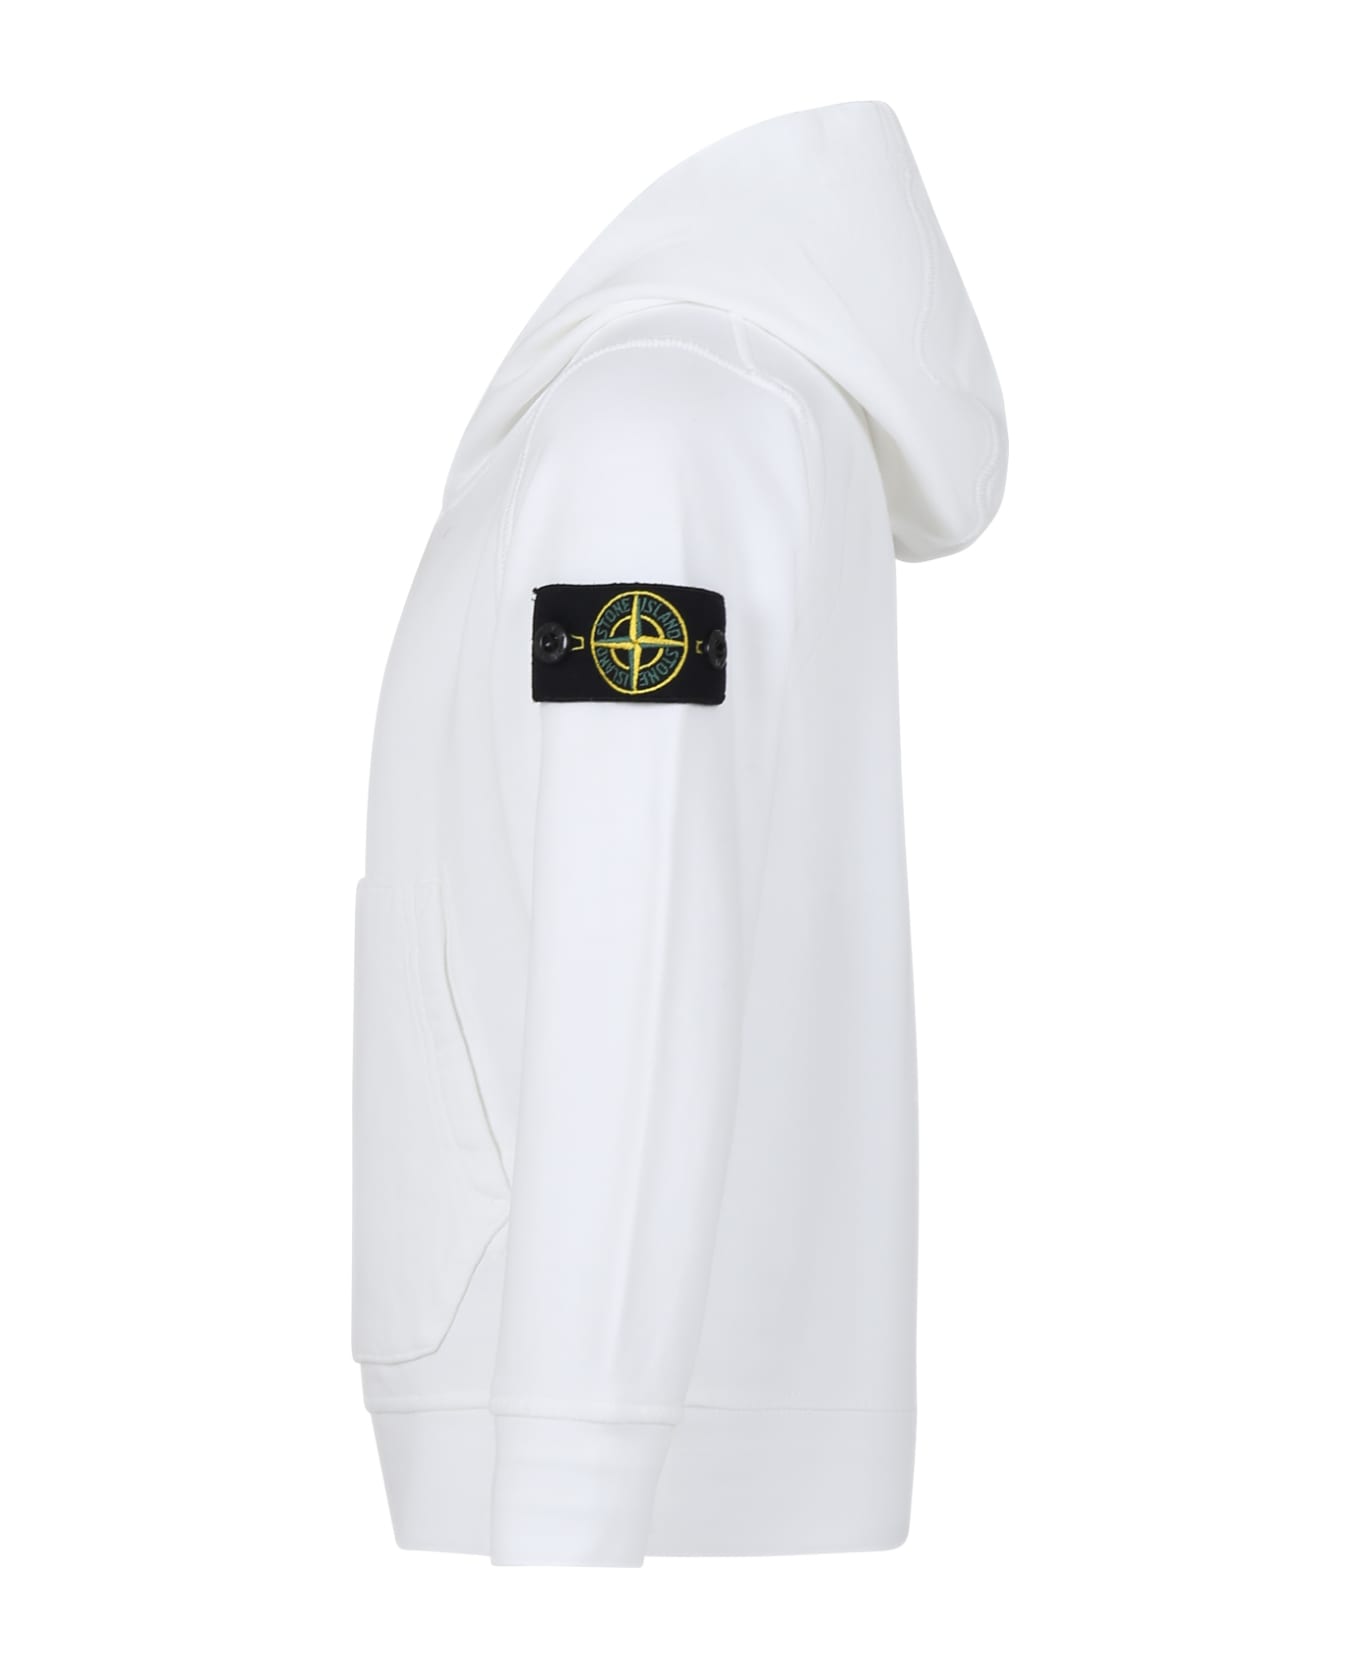 Stone Island Junior White Sweatshirt For Boy With Iconic Logo - White ニットウェア＆スウェットシャツ